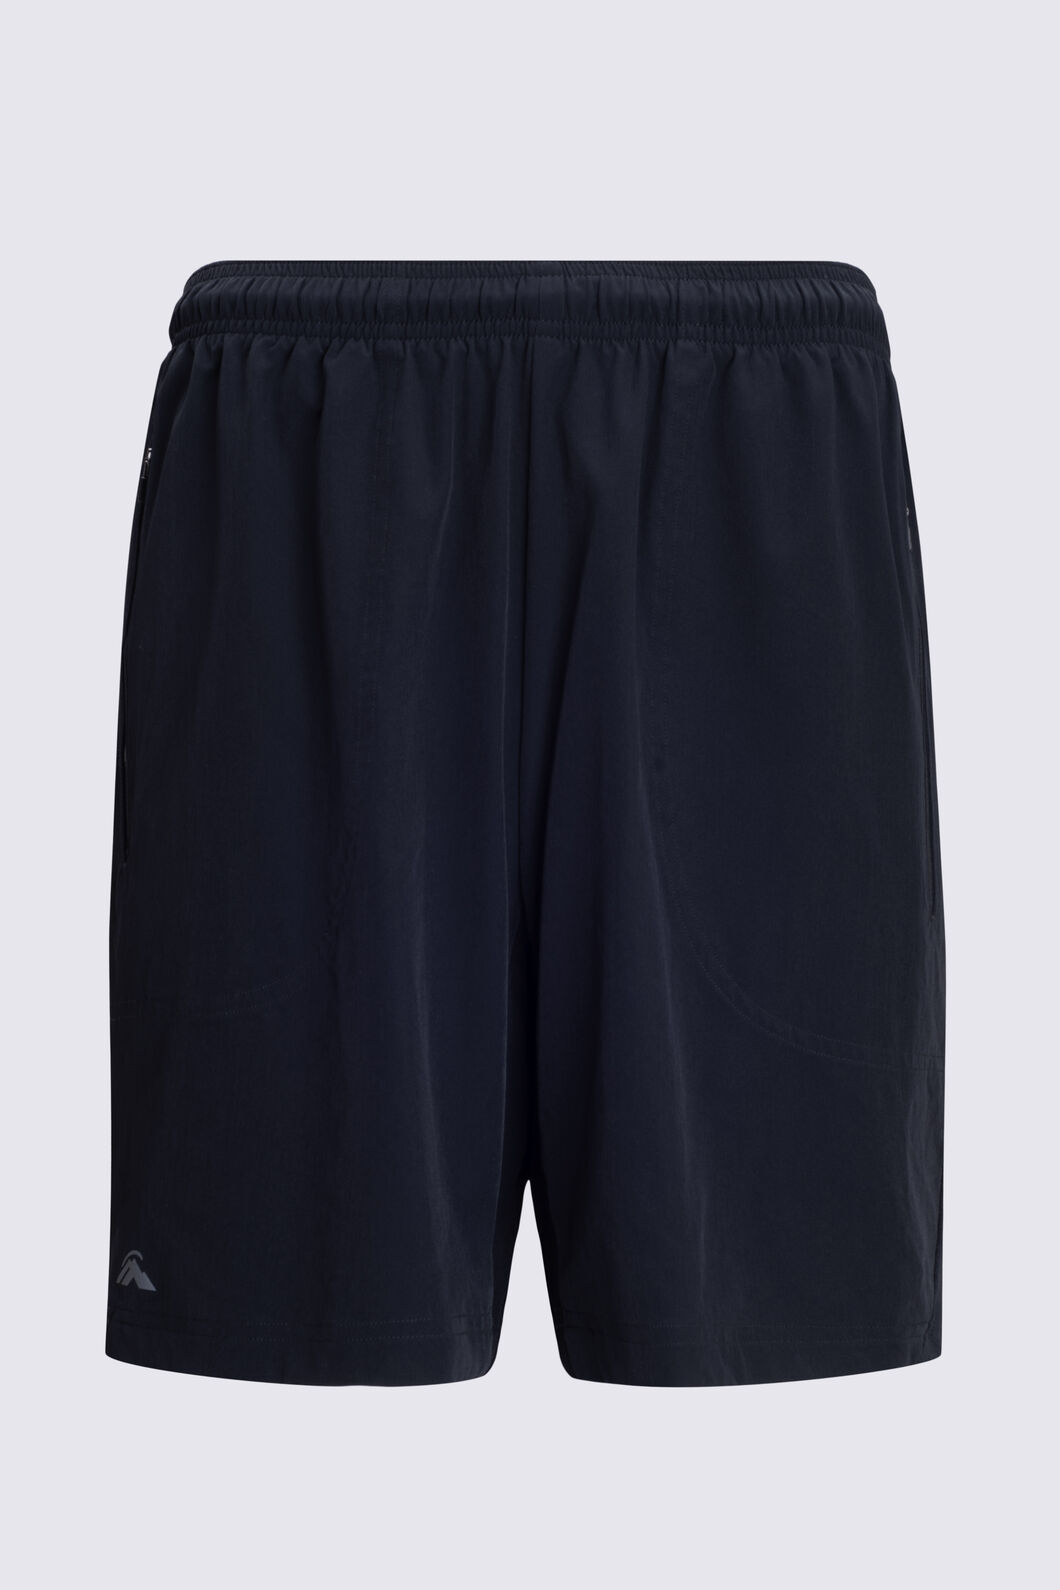 Wholesales 2023 pants sports cotton Spandex Workout Shorts Mesh